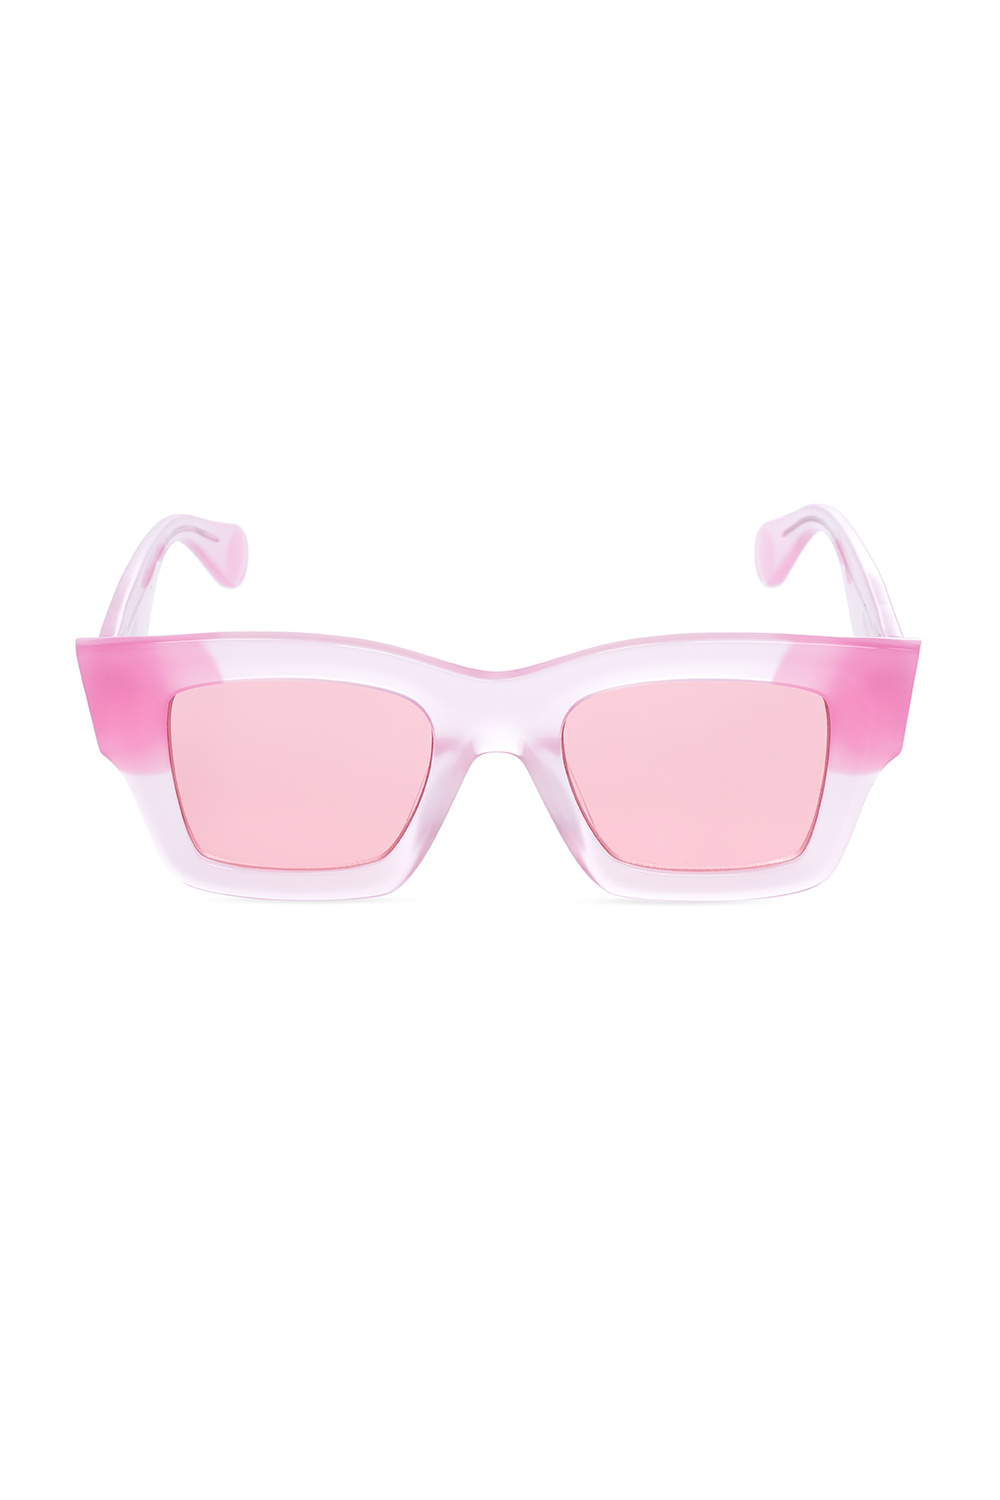 Jacquemus ‘Baci’ sunglasses